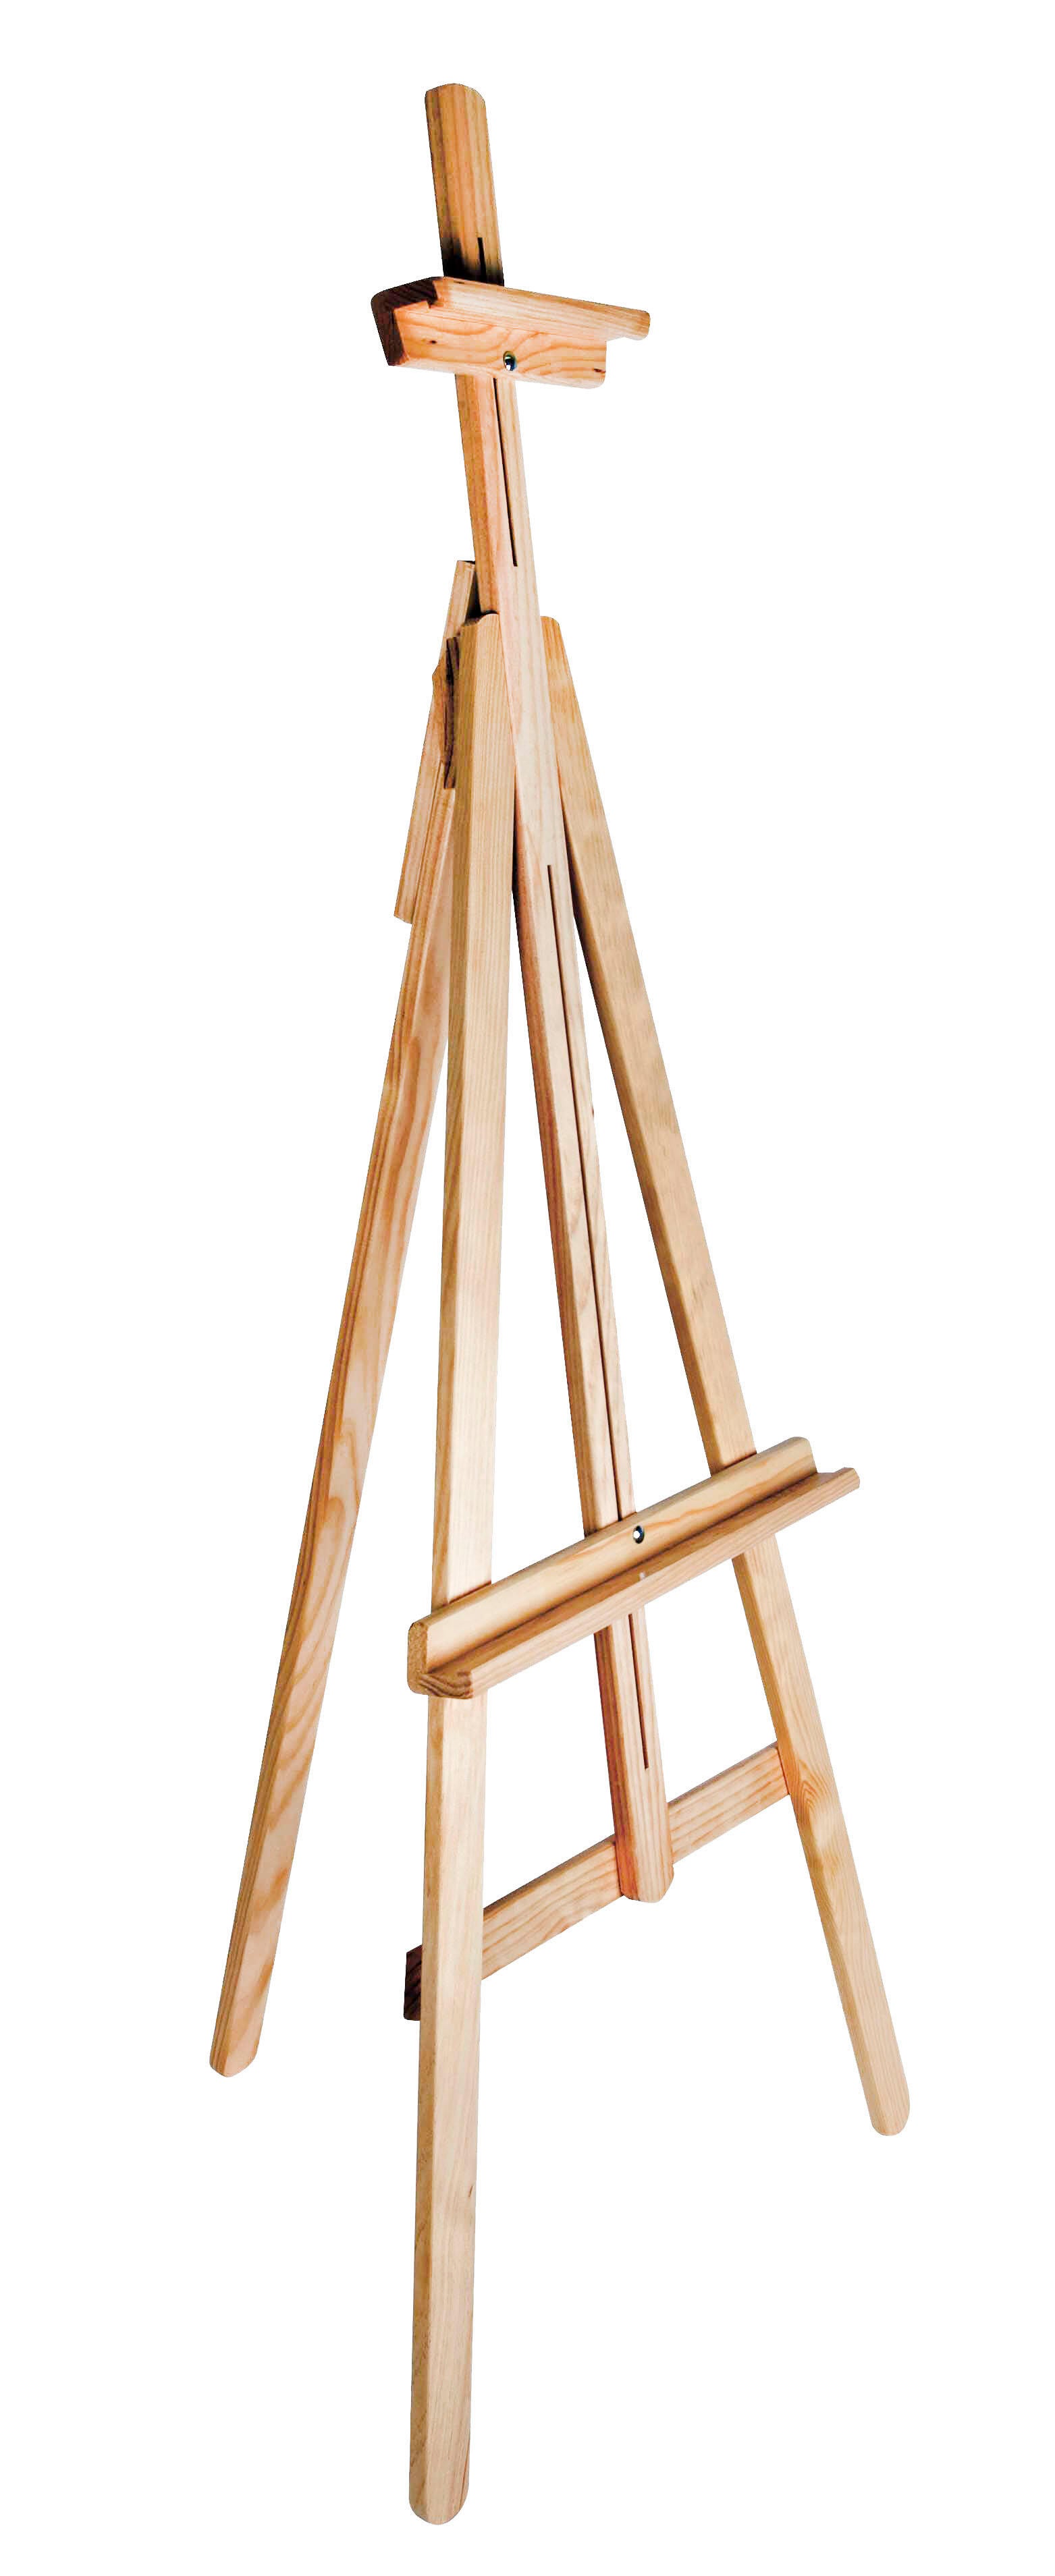 Caballete pintor de madera 1,55cm